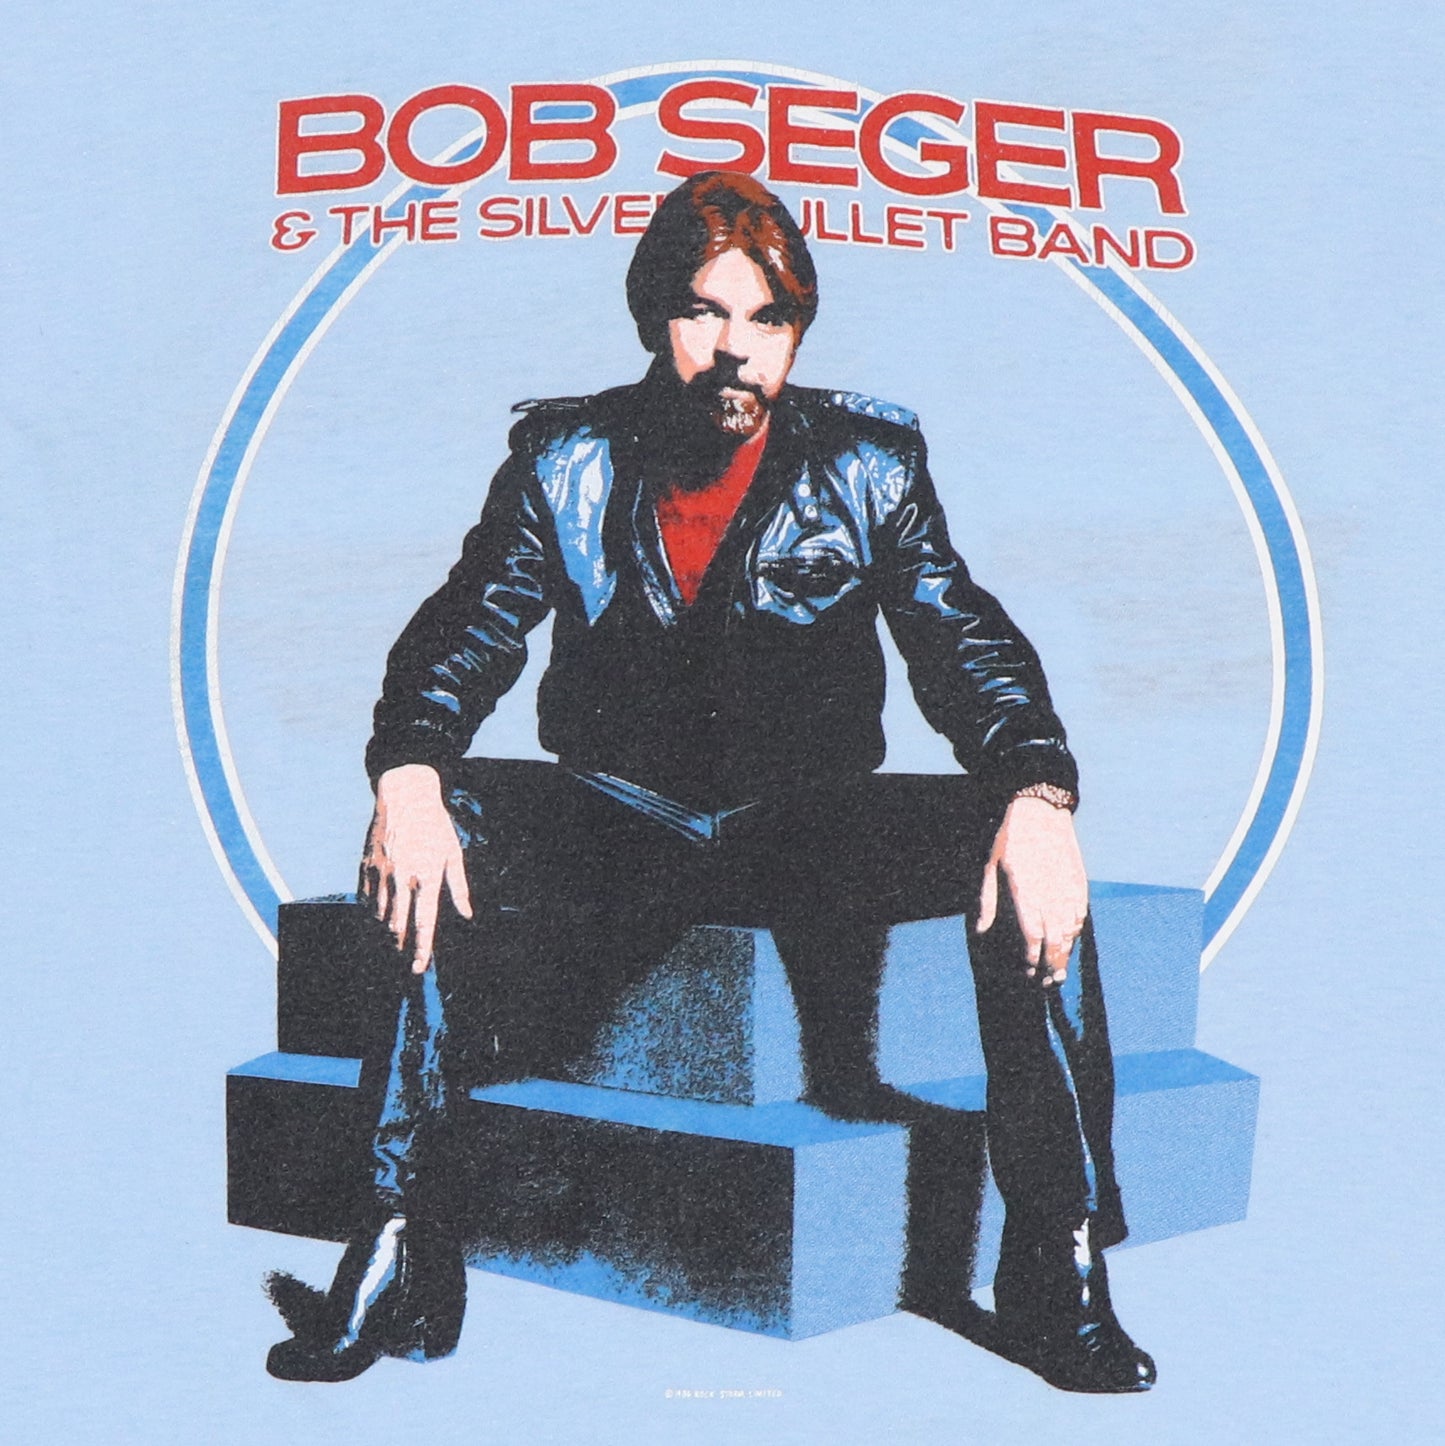 1986 Bob Seger Tour Shirt